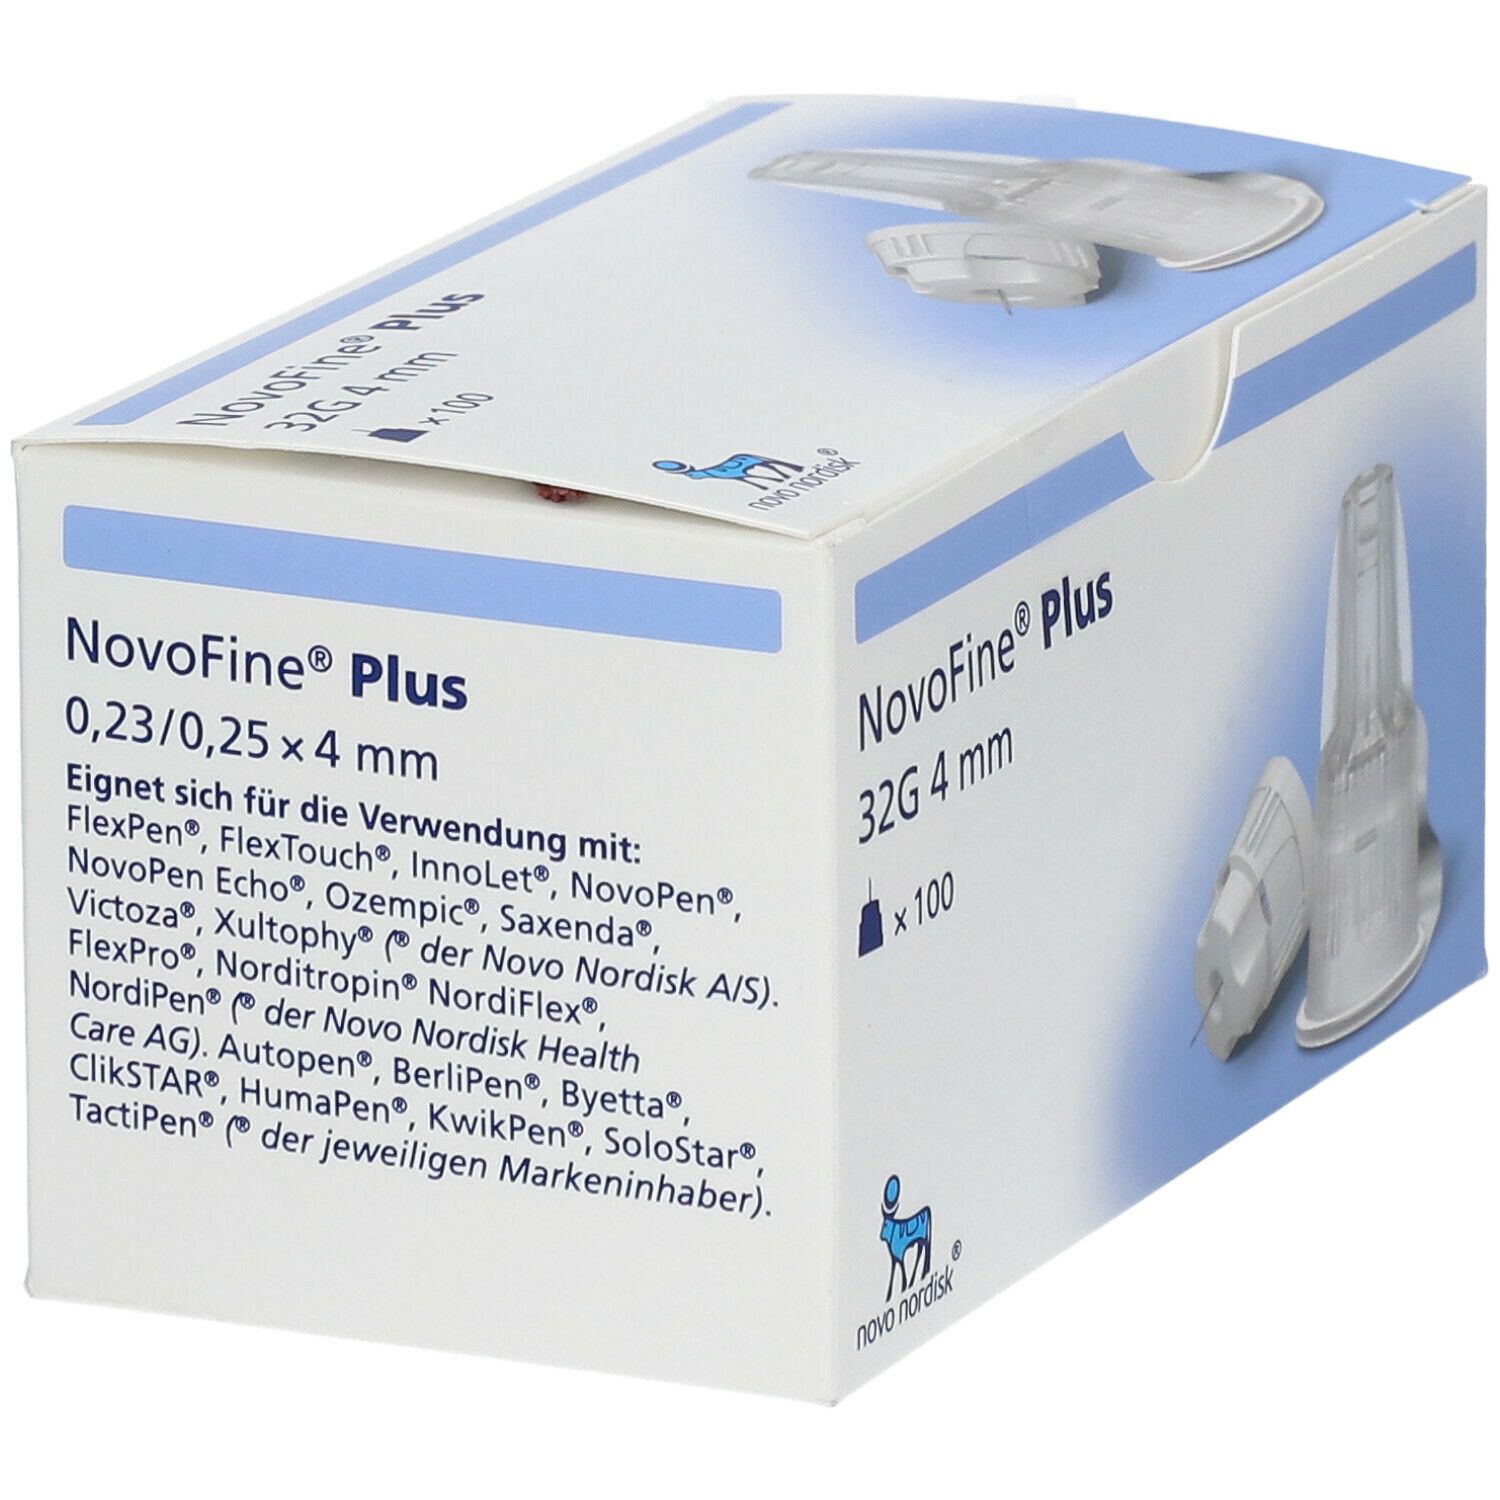 NovoFine® Plus 32 G 4 mm 100 St - SHOP APOTHEKE